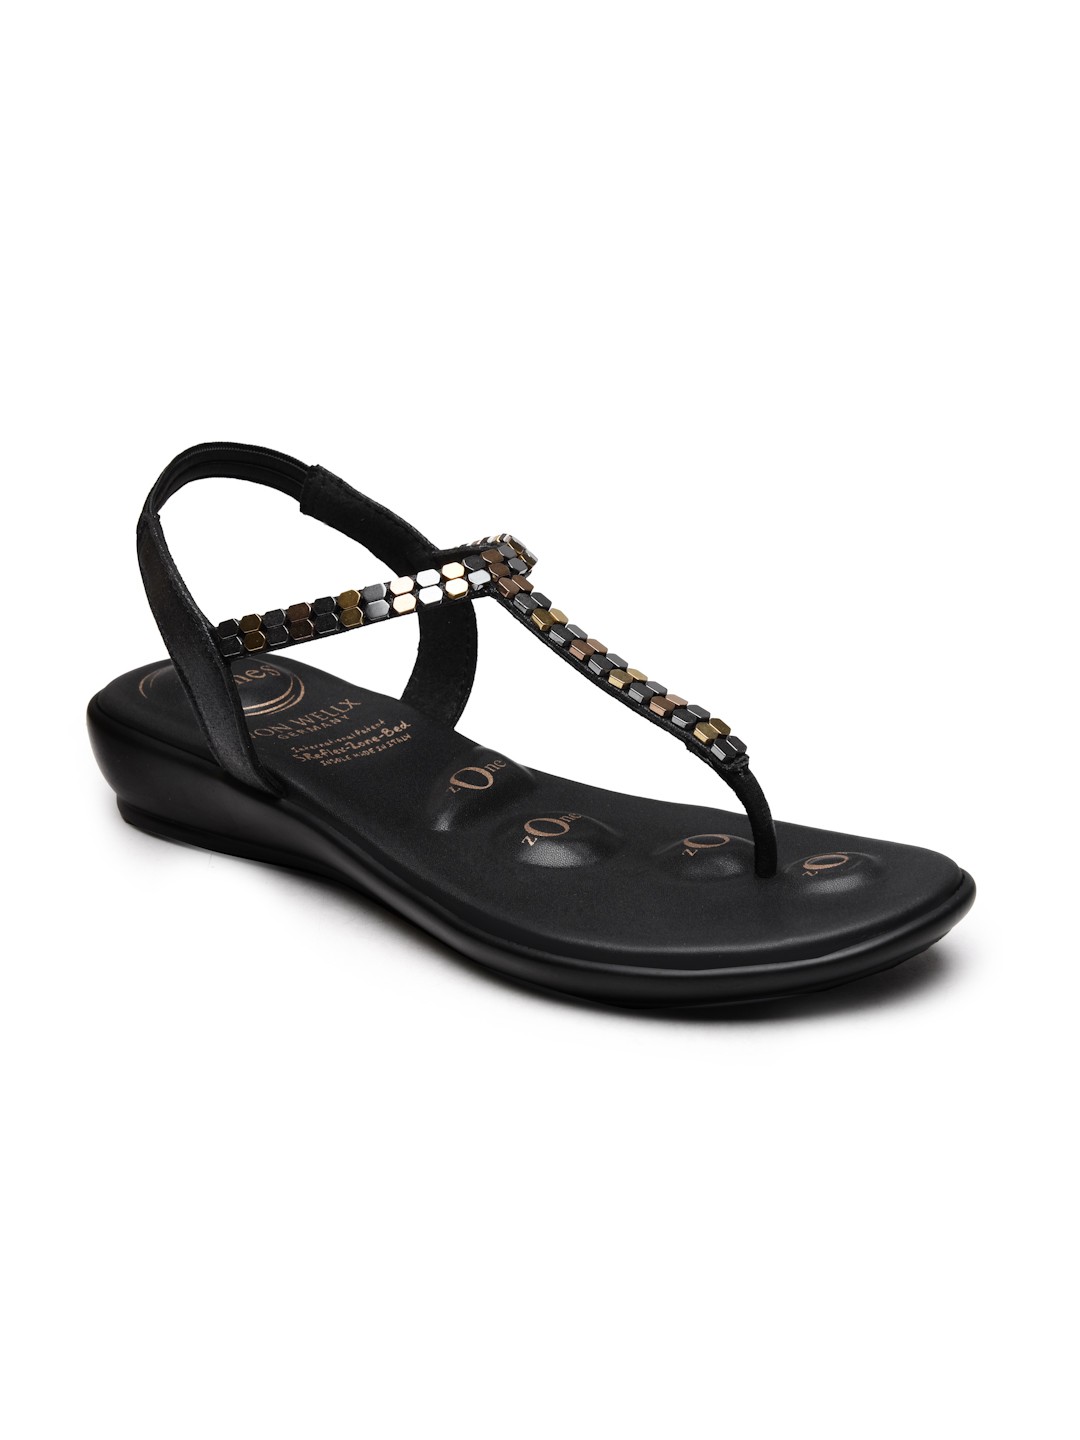 Buy Von Wellx Germany Comfort Women's Black Casual Sandals Regina Online in Abu Dhabi